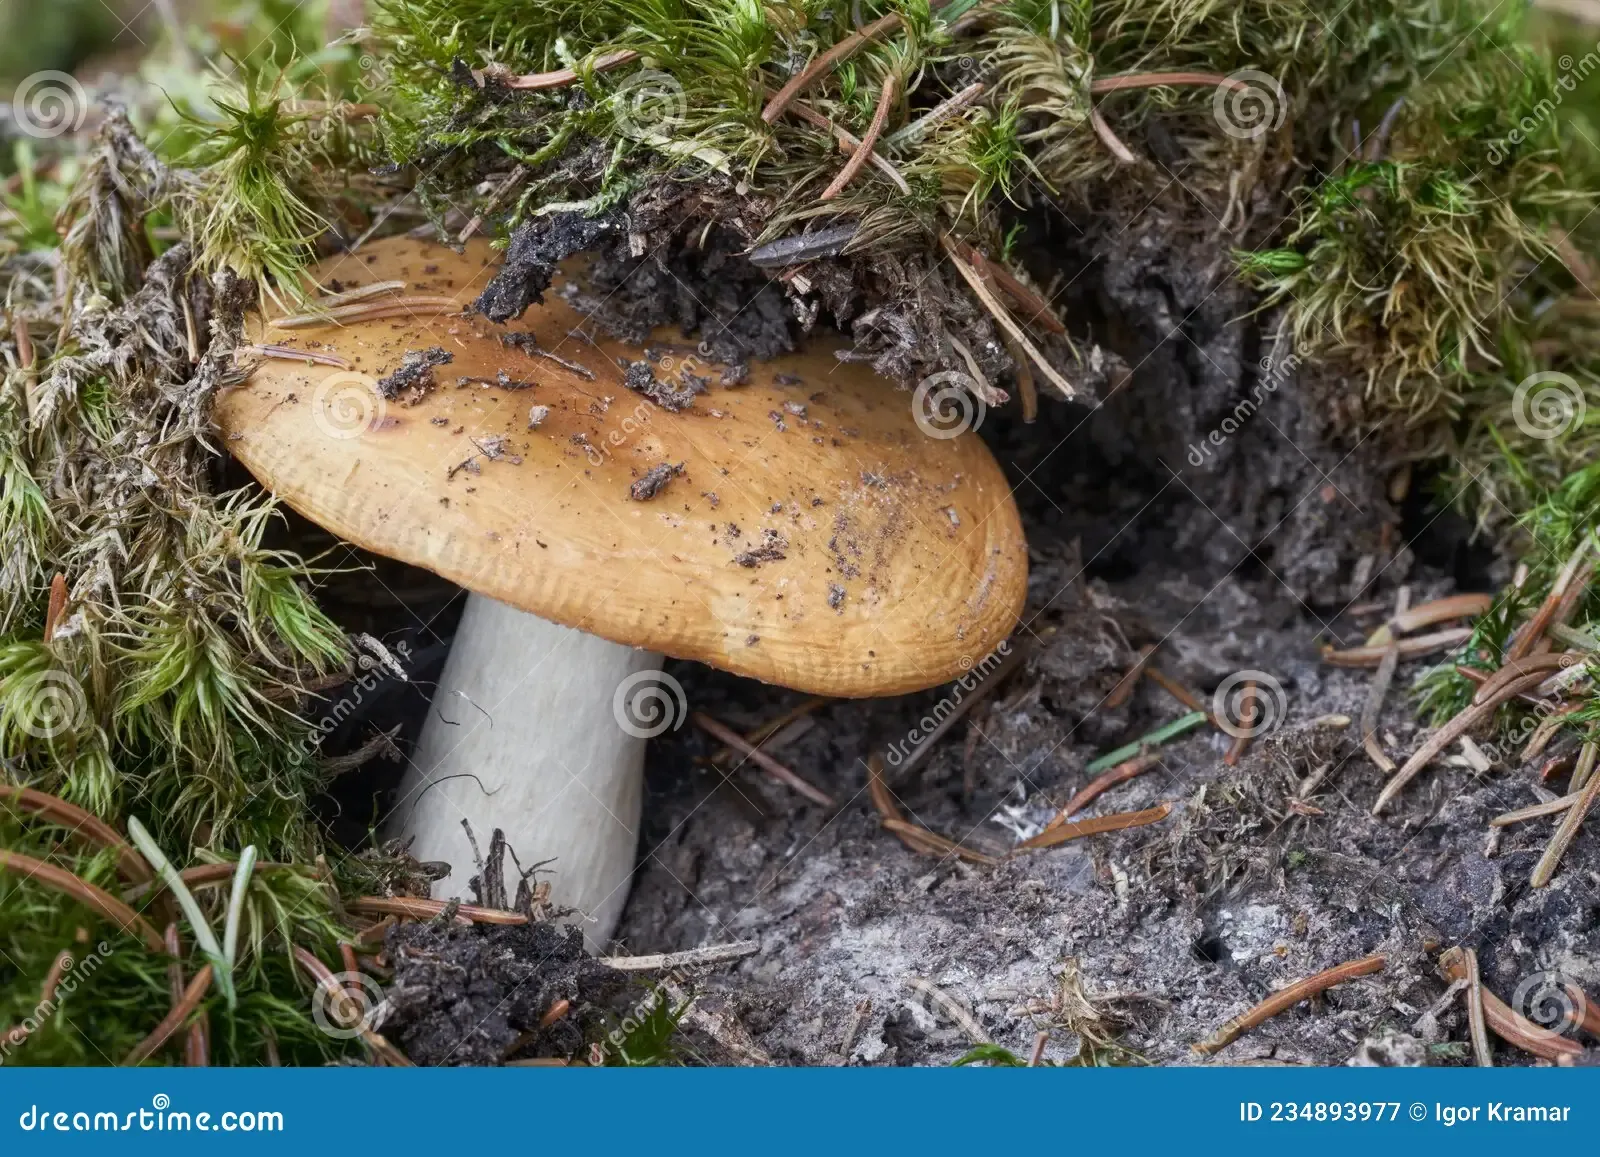 edible-mushroom-russula-ochroleuca-spruce-forest-known-as-common-yellow-ochre-brittlegill-wild-cap-growing-234893977.jpg